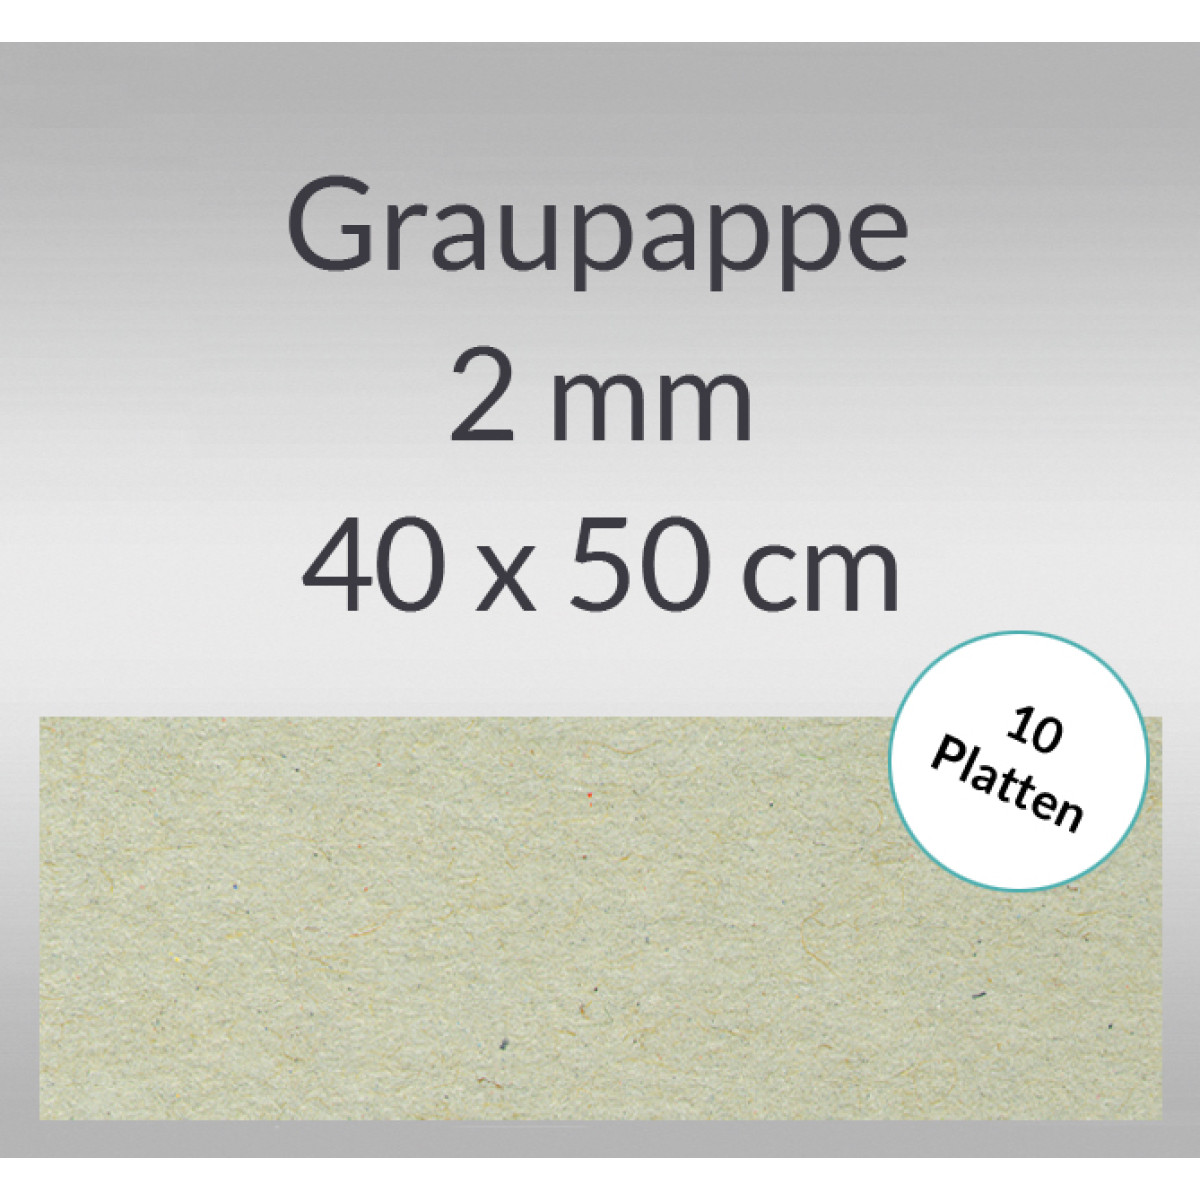 Graupappe 40 x 50 cm - 2 mm